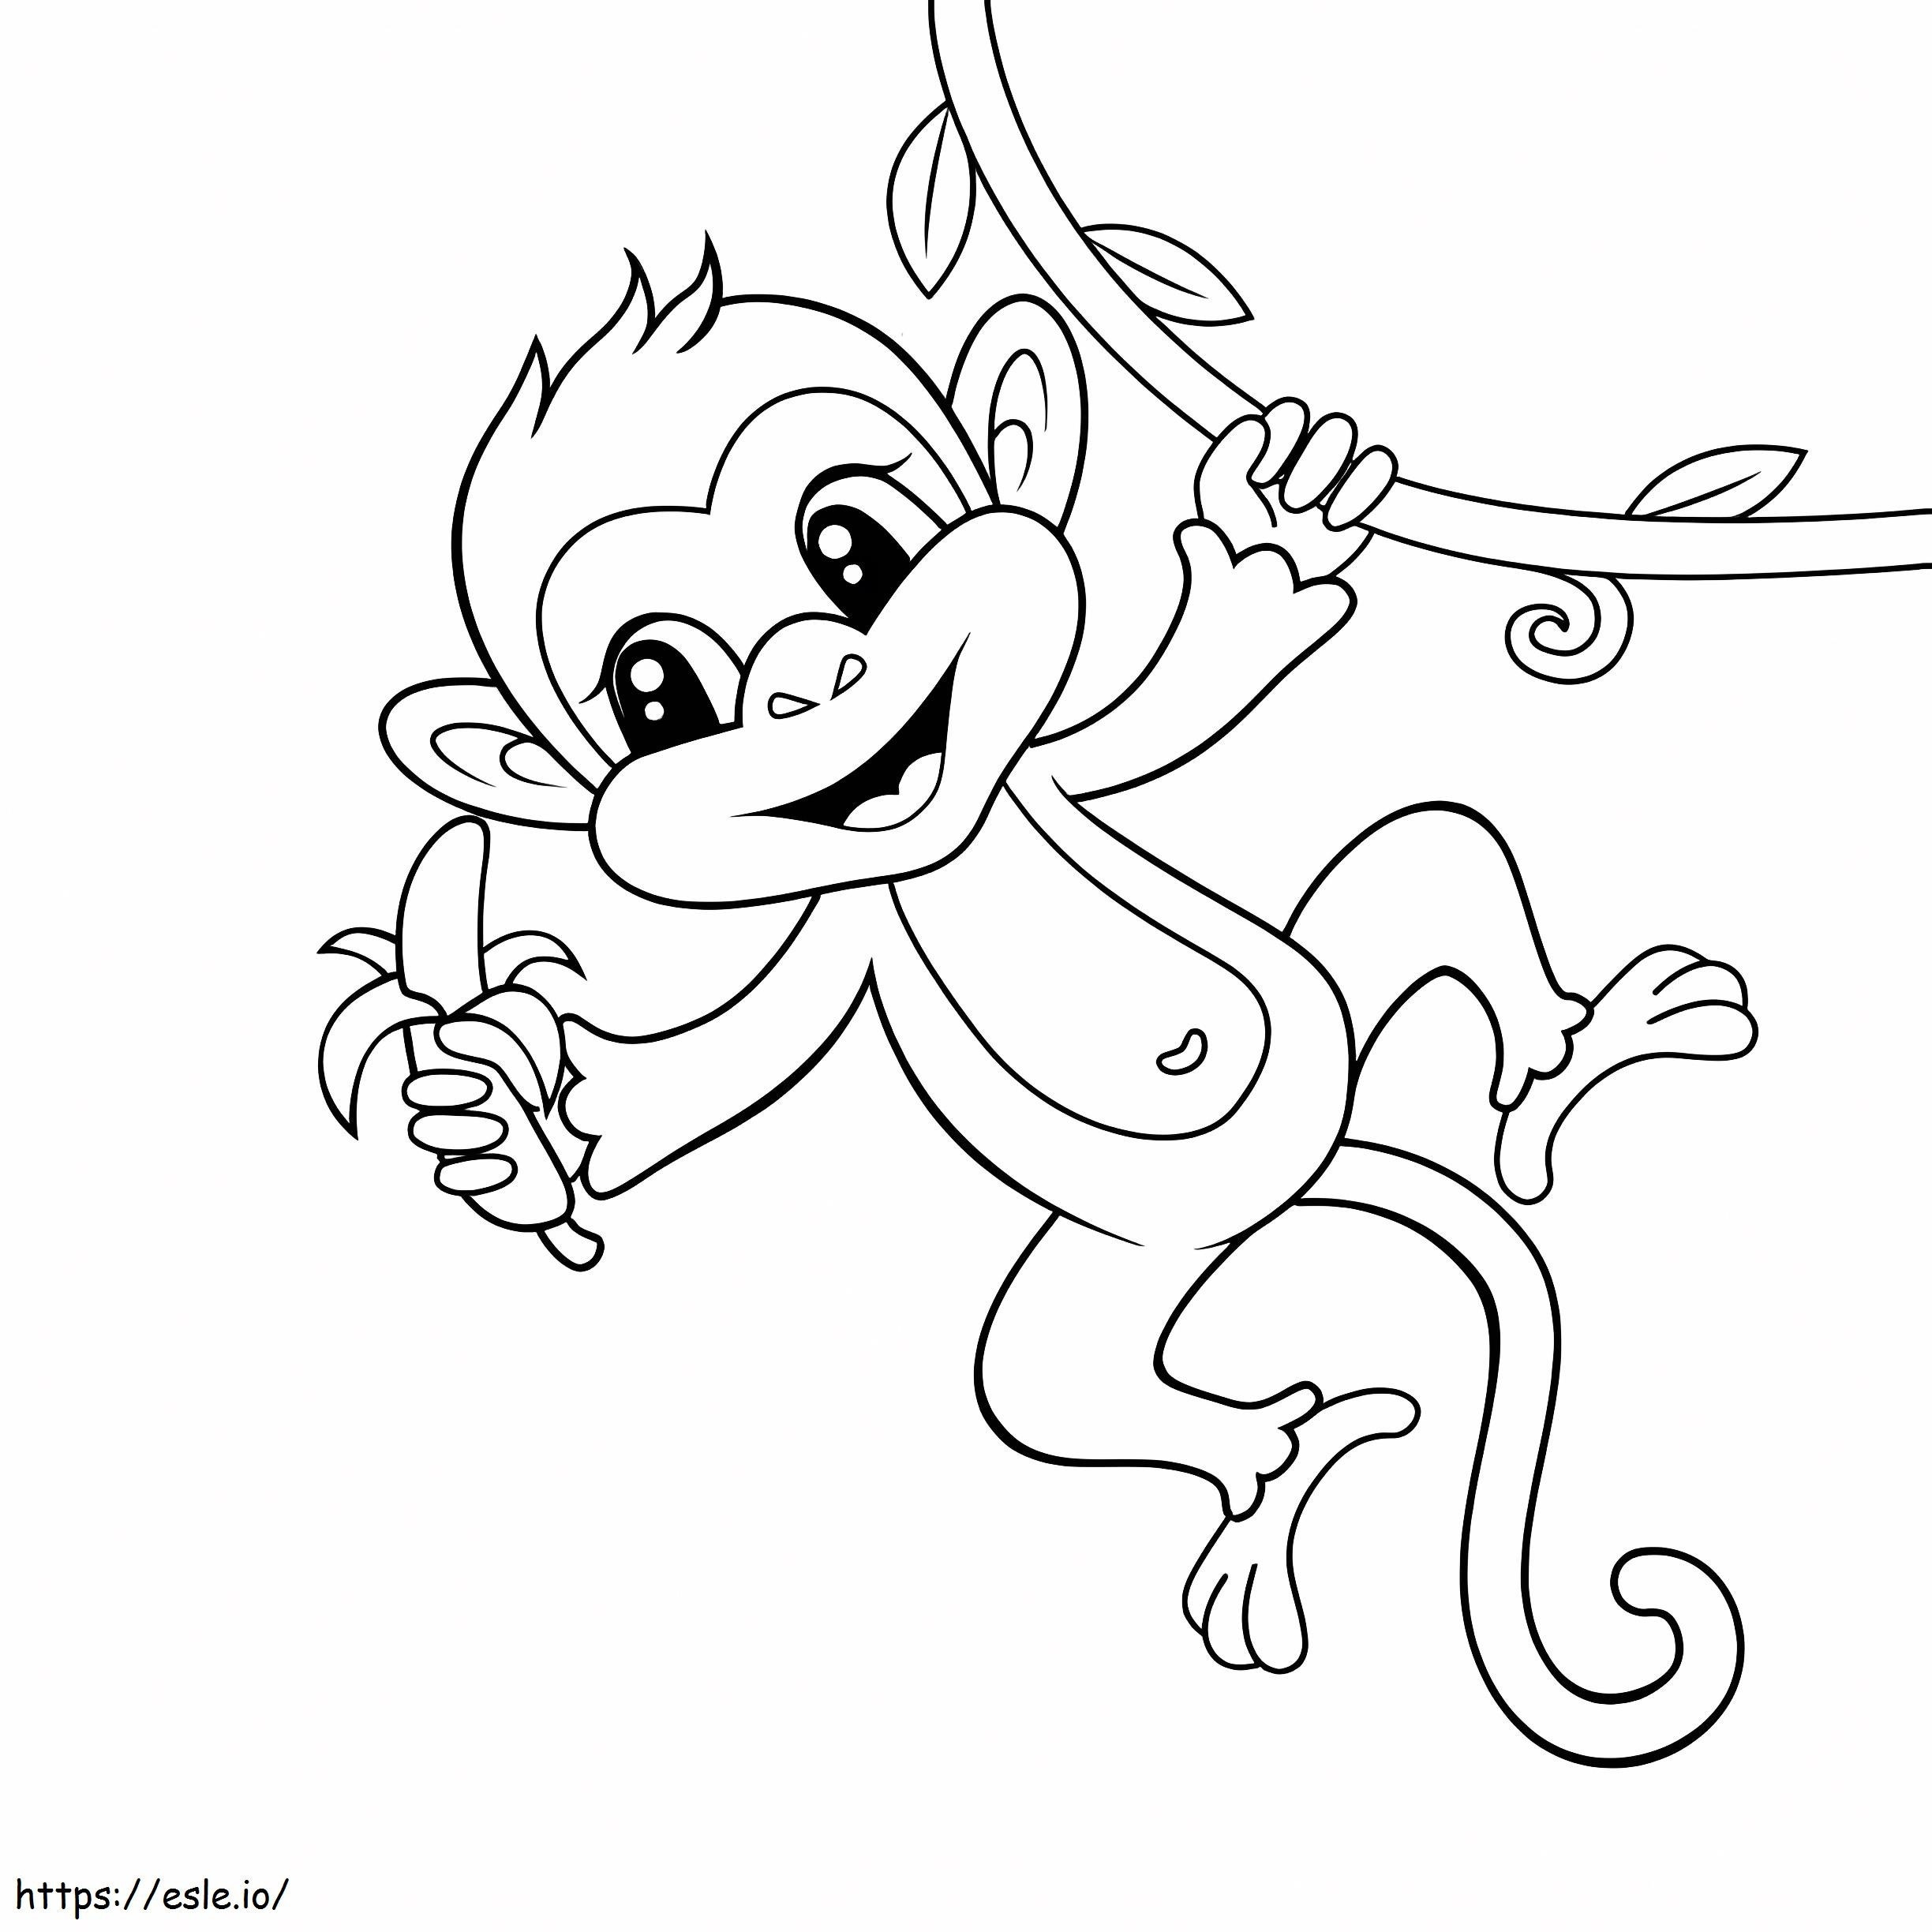 Affe hält Banane und klettert ausmalbilder